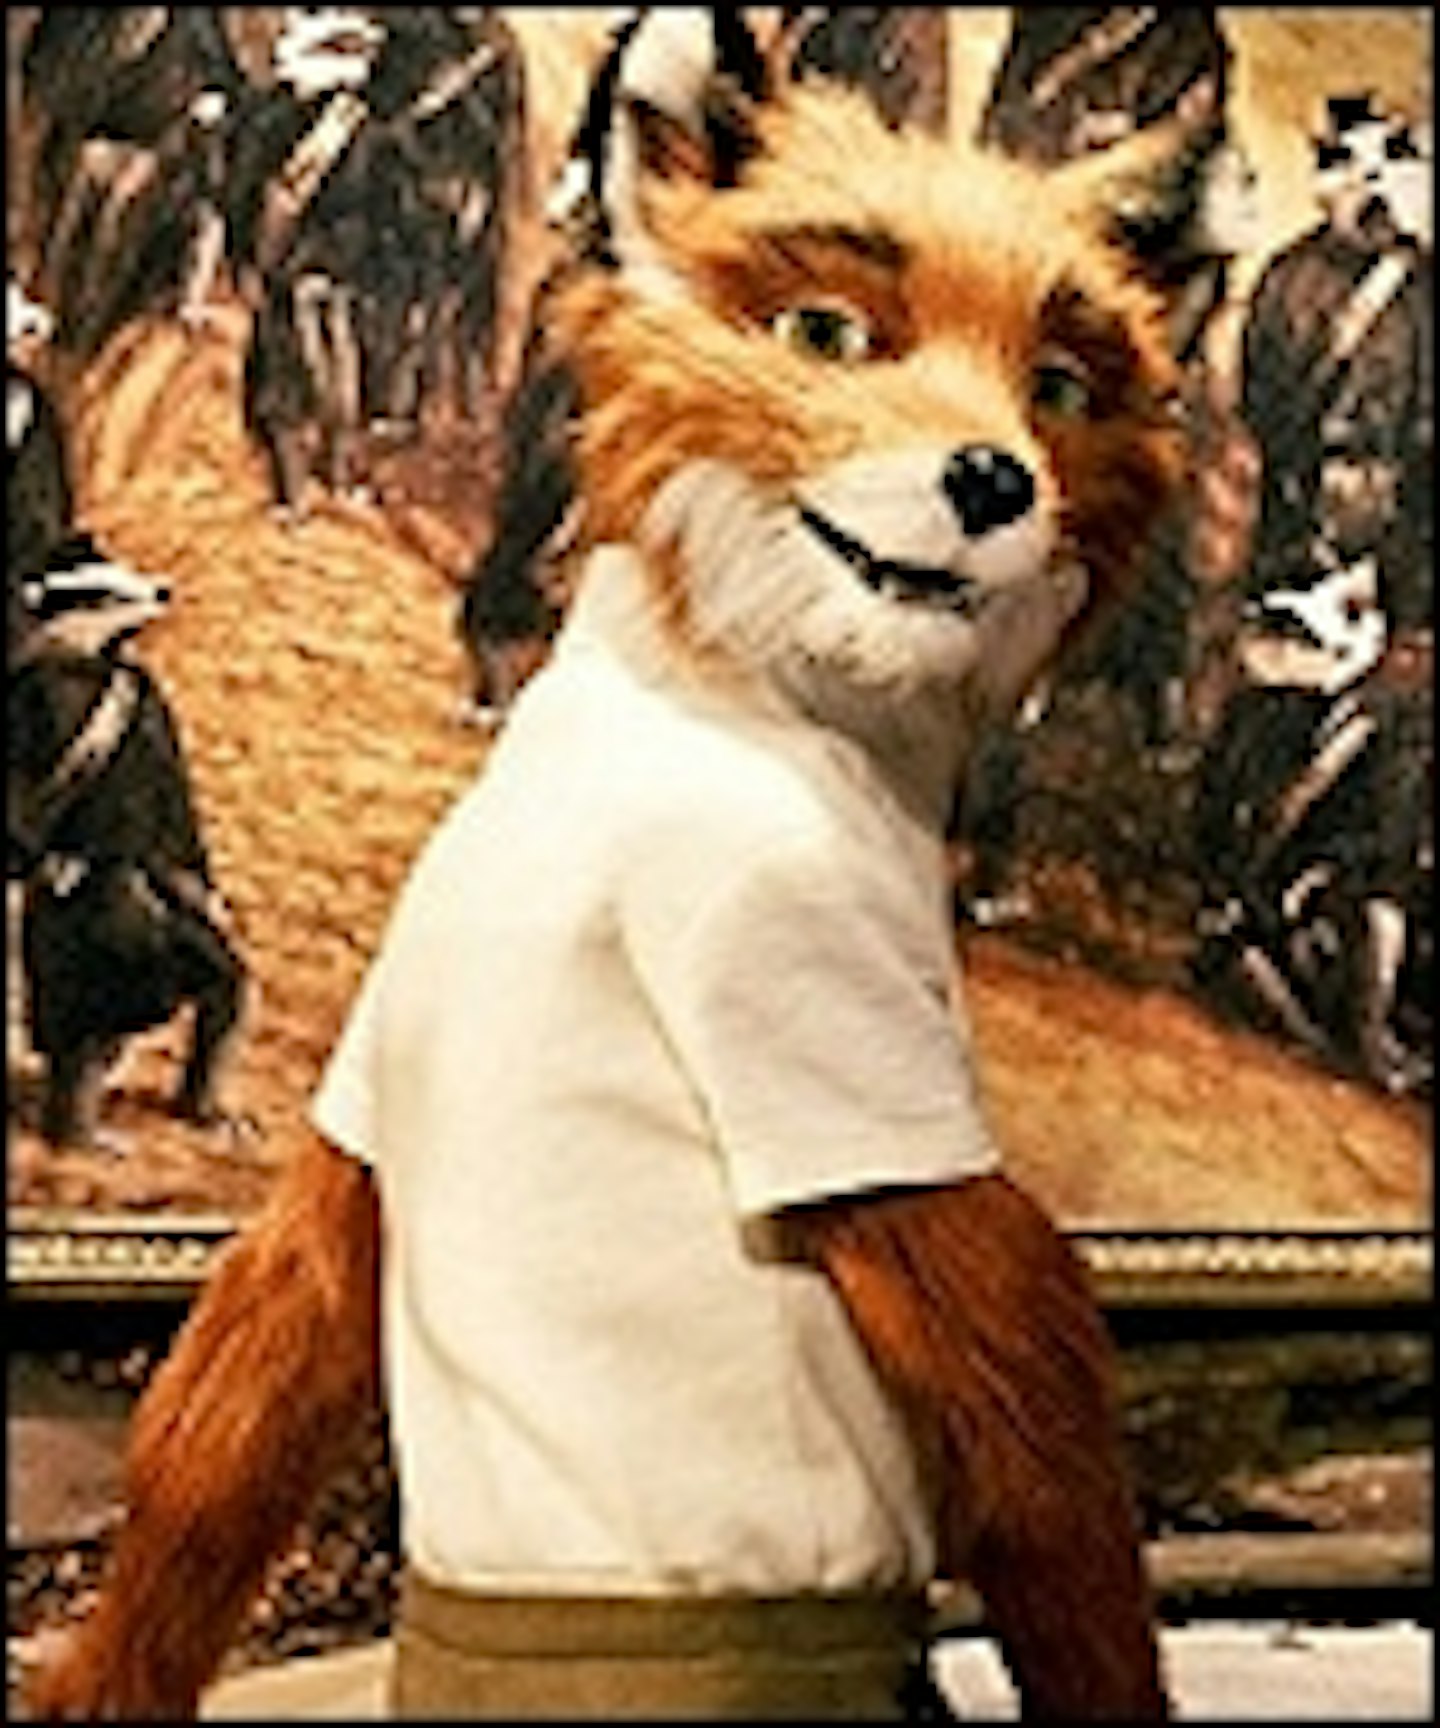 New Fantastic Mr Fox Trailer Online